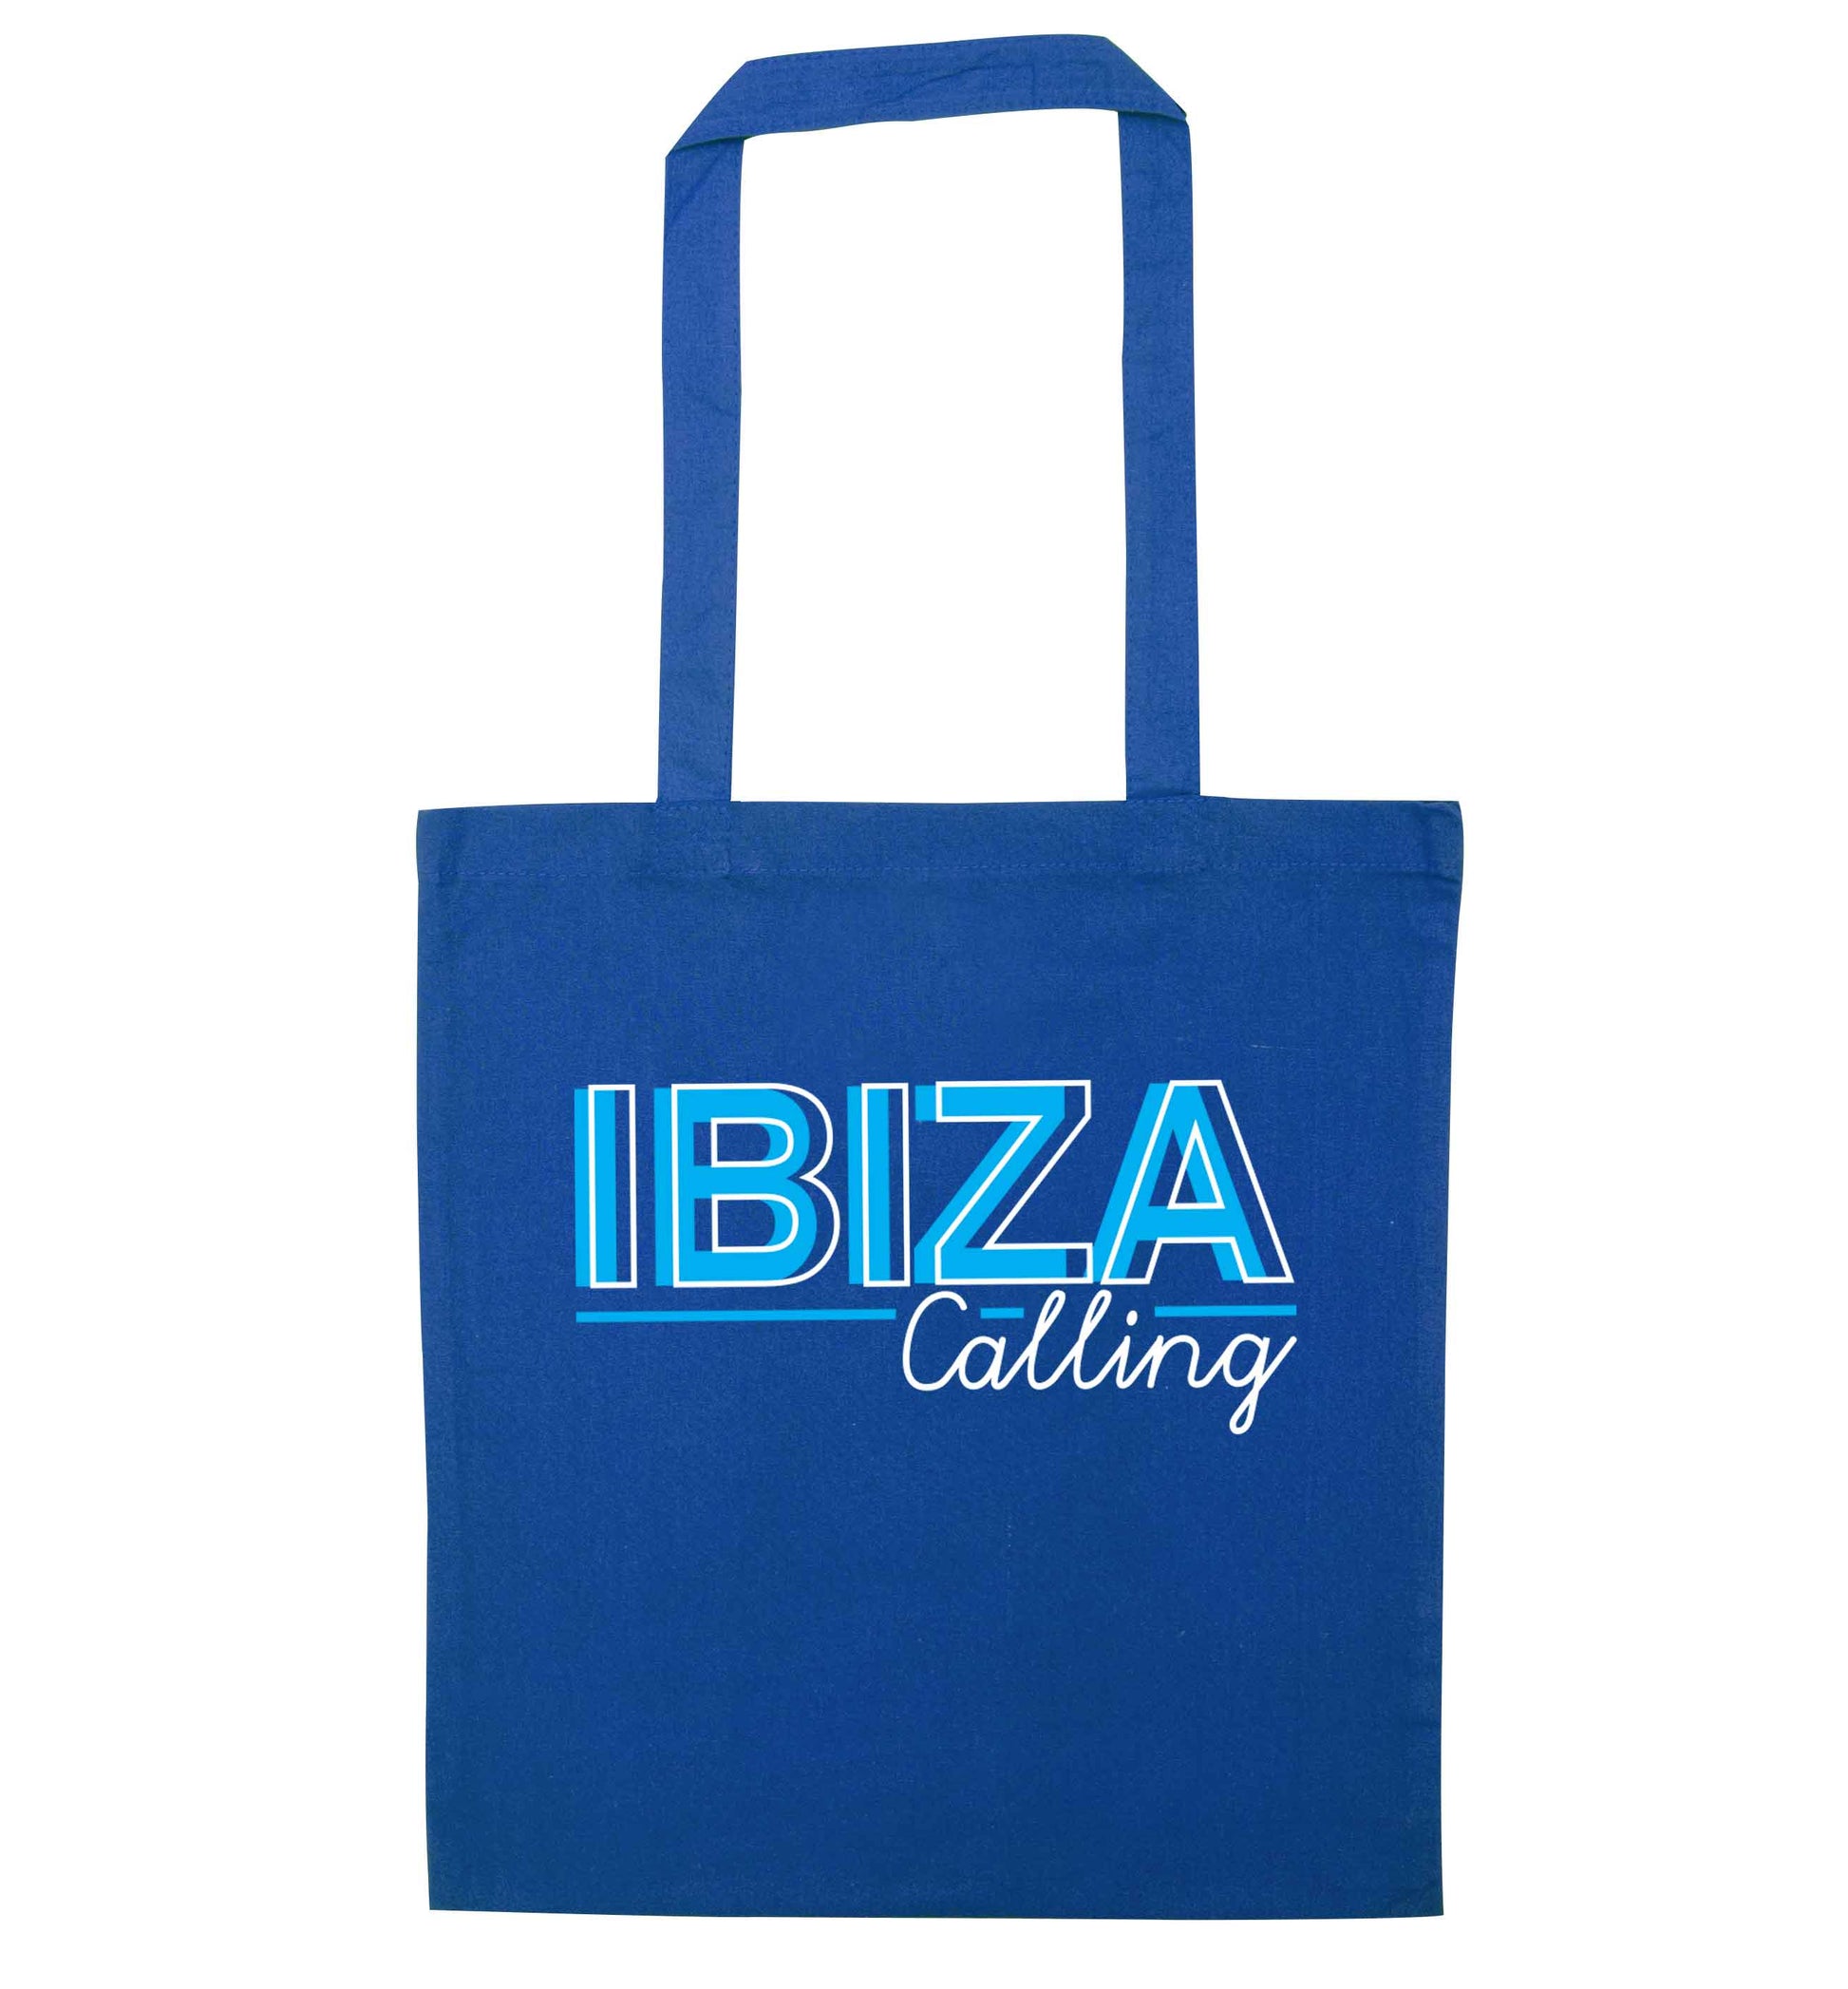 Ibiza calling blue tote bag